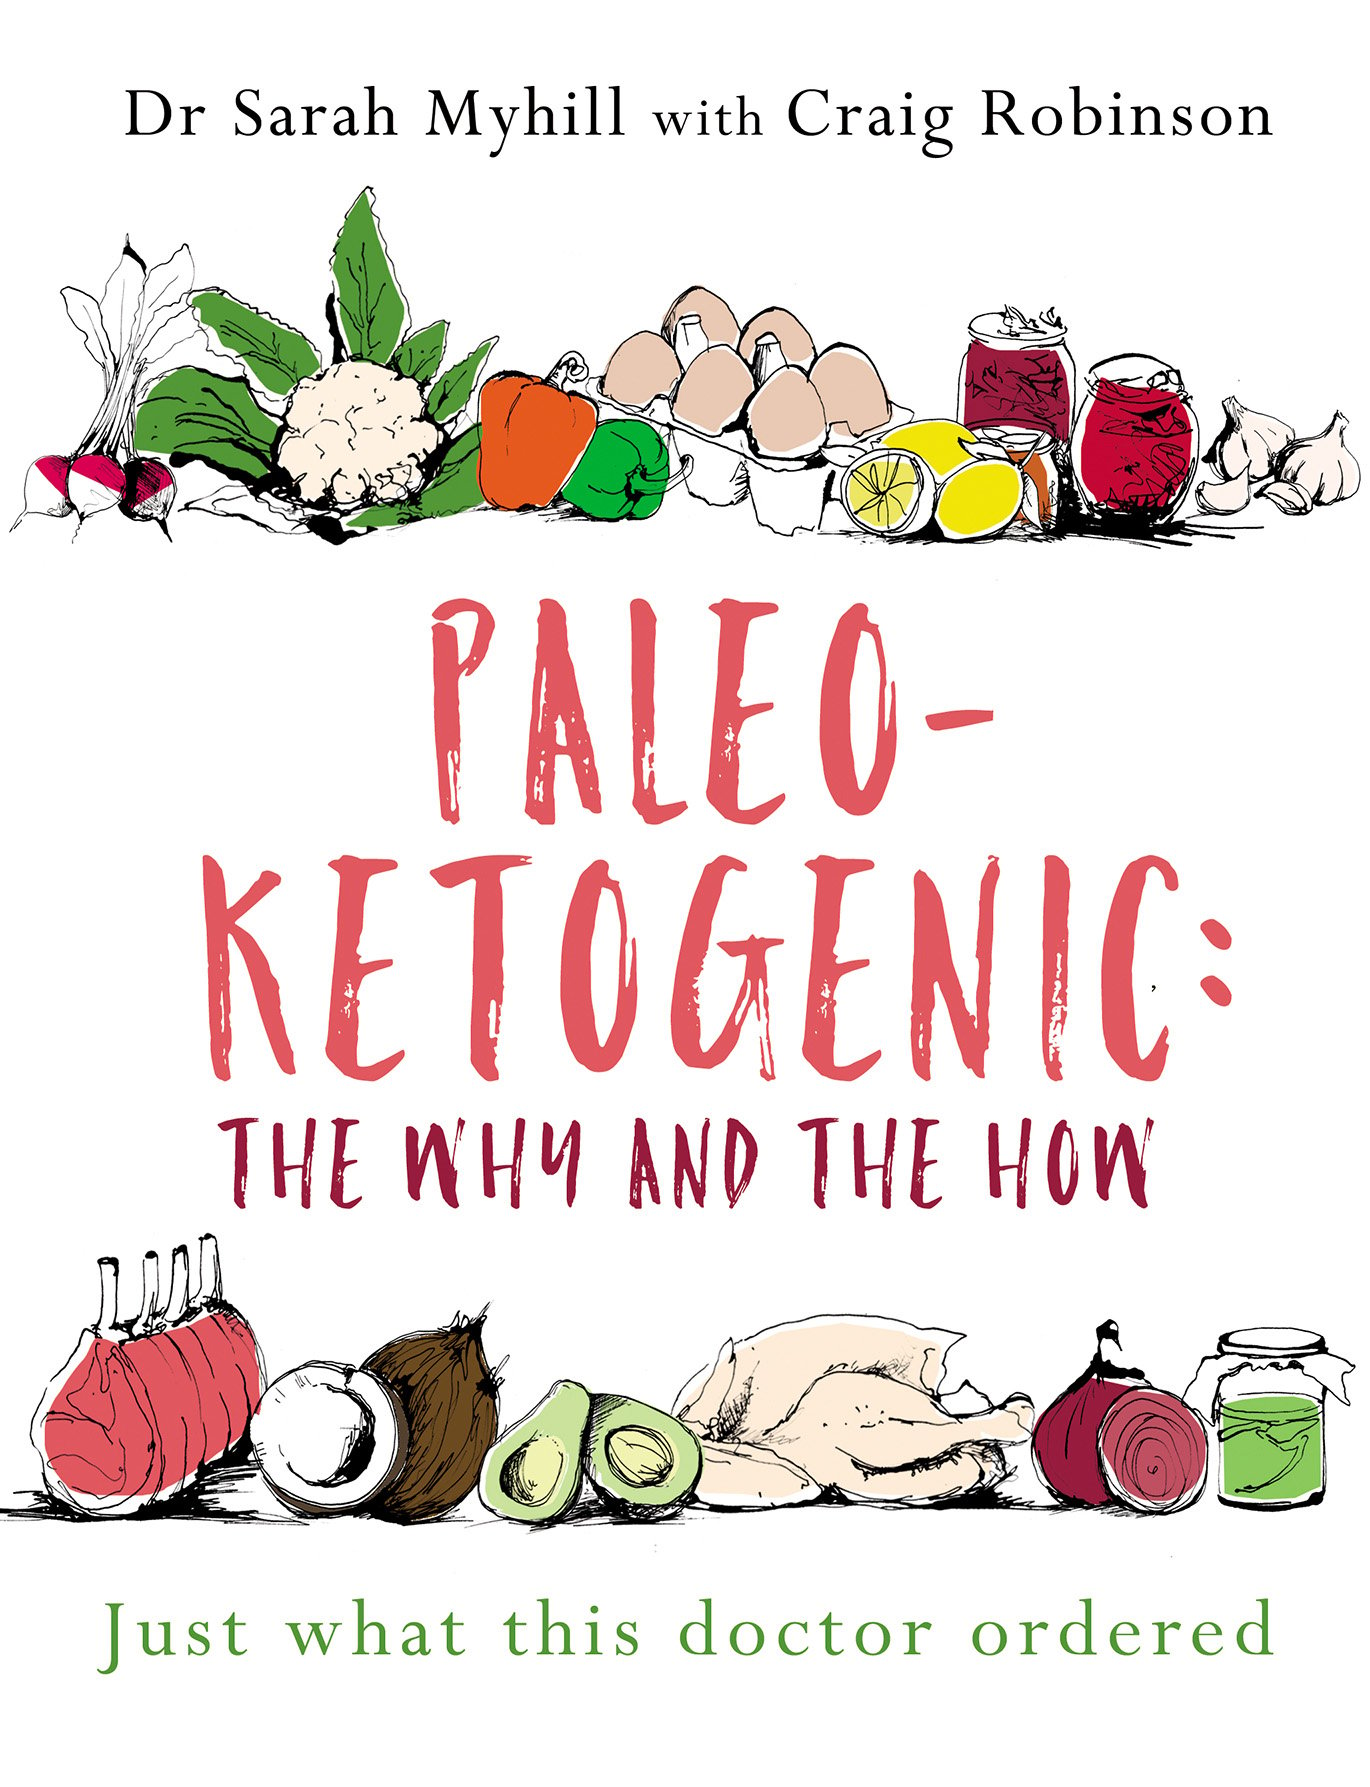 The Paleo-Ketogenic cover